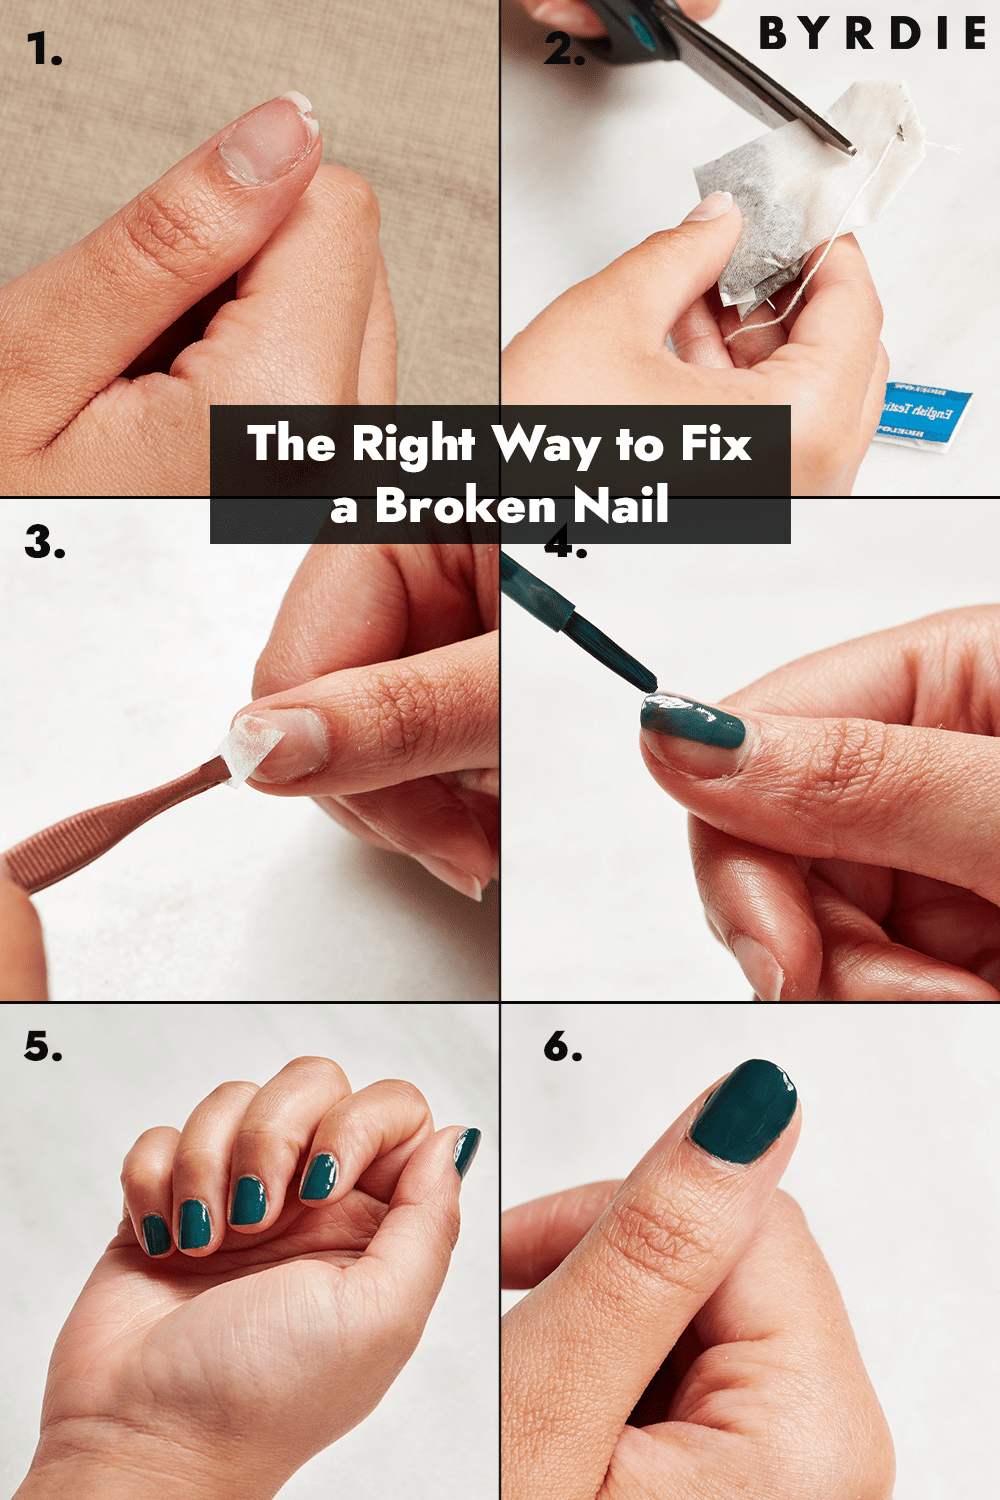 Como consertar a unha quebrada, de acordo com os mestres da manicure